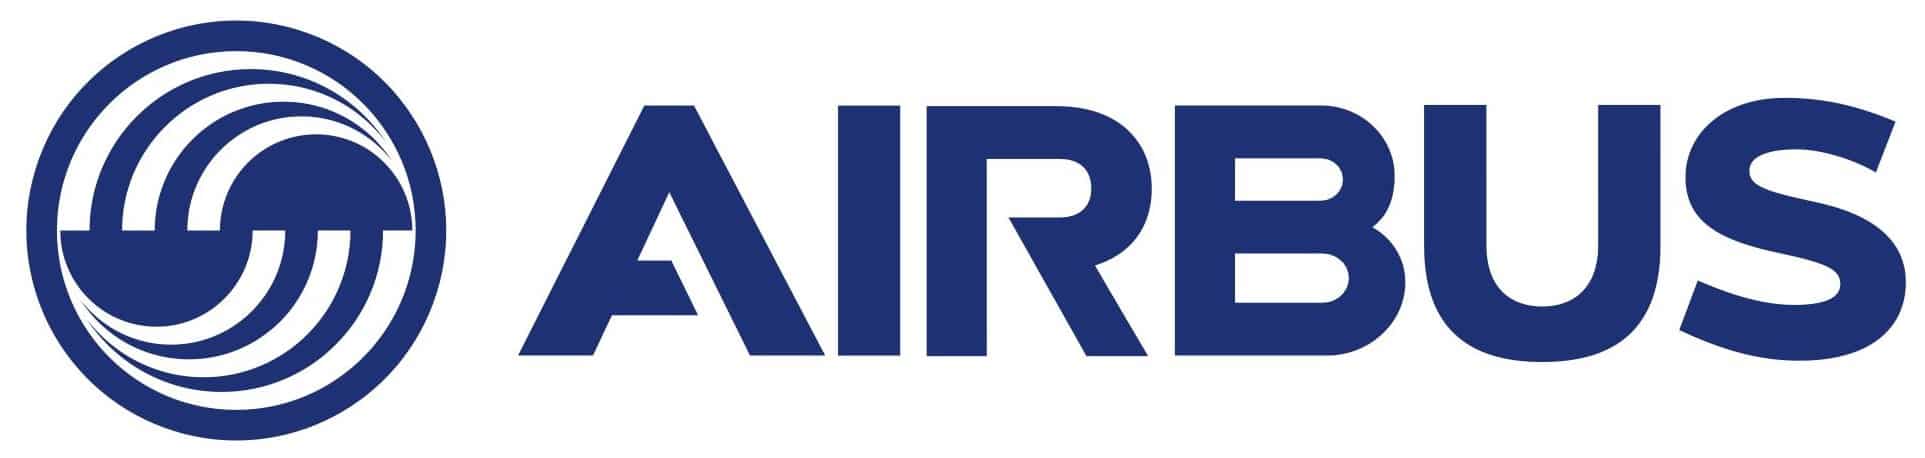 airbus new logo